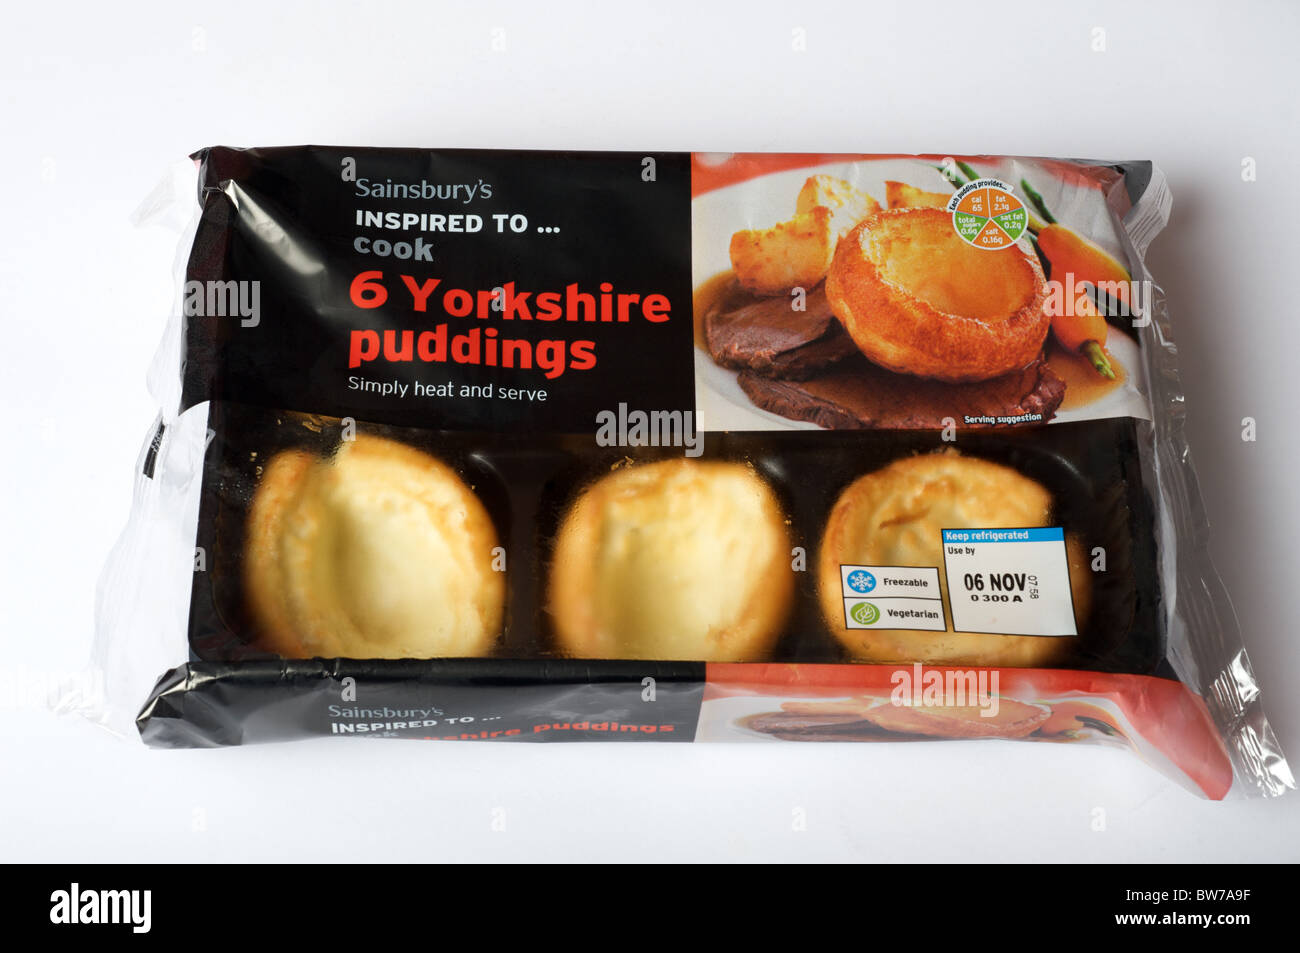 Sainsbury's Yorkshire puddings Stock Photo - Alamy